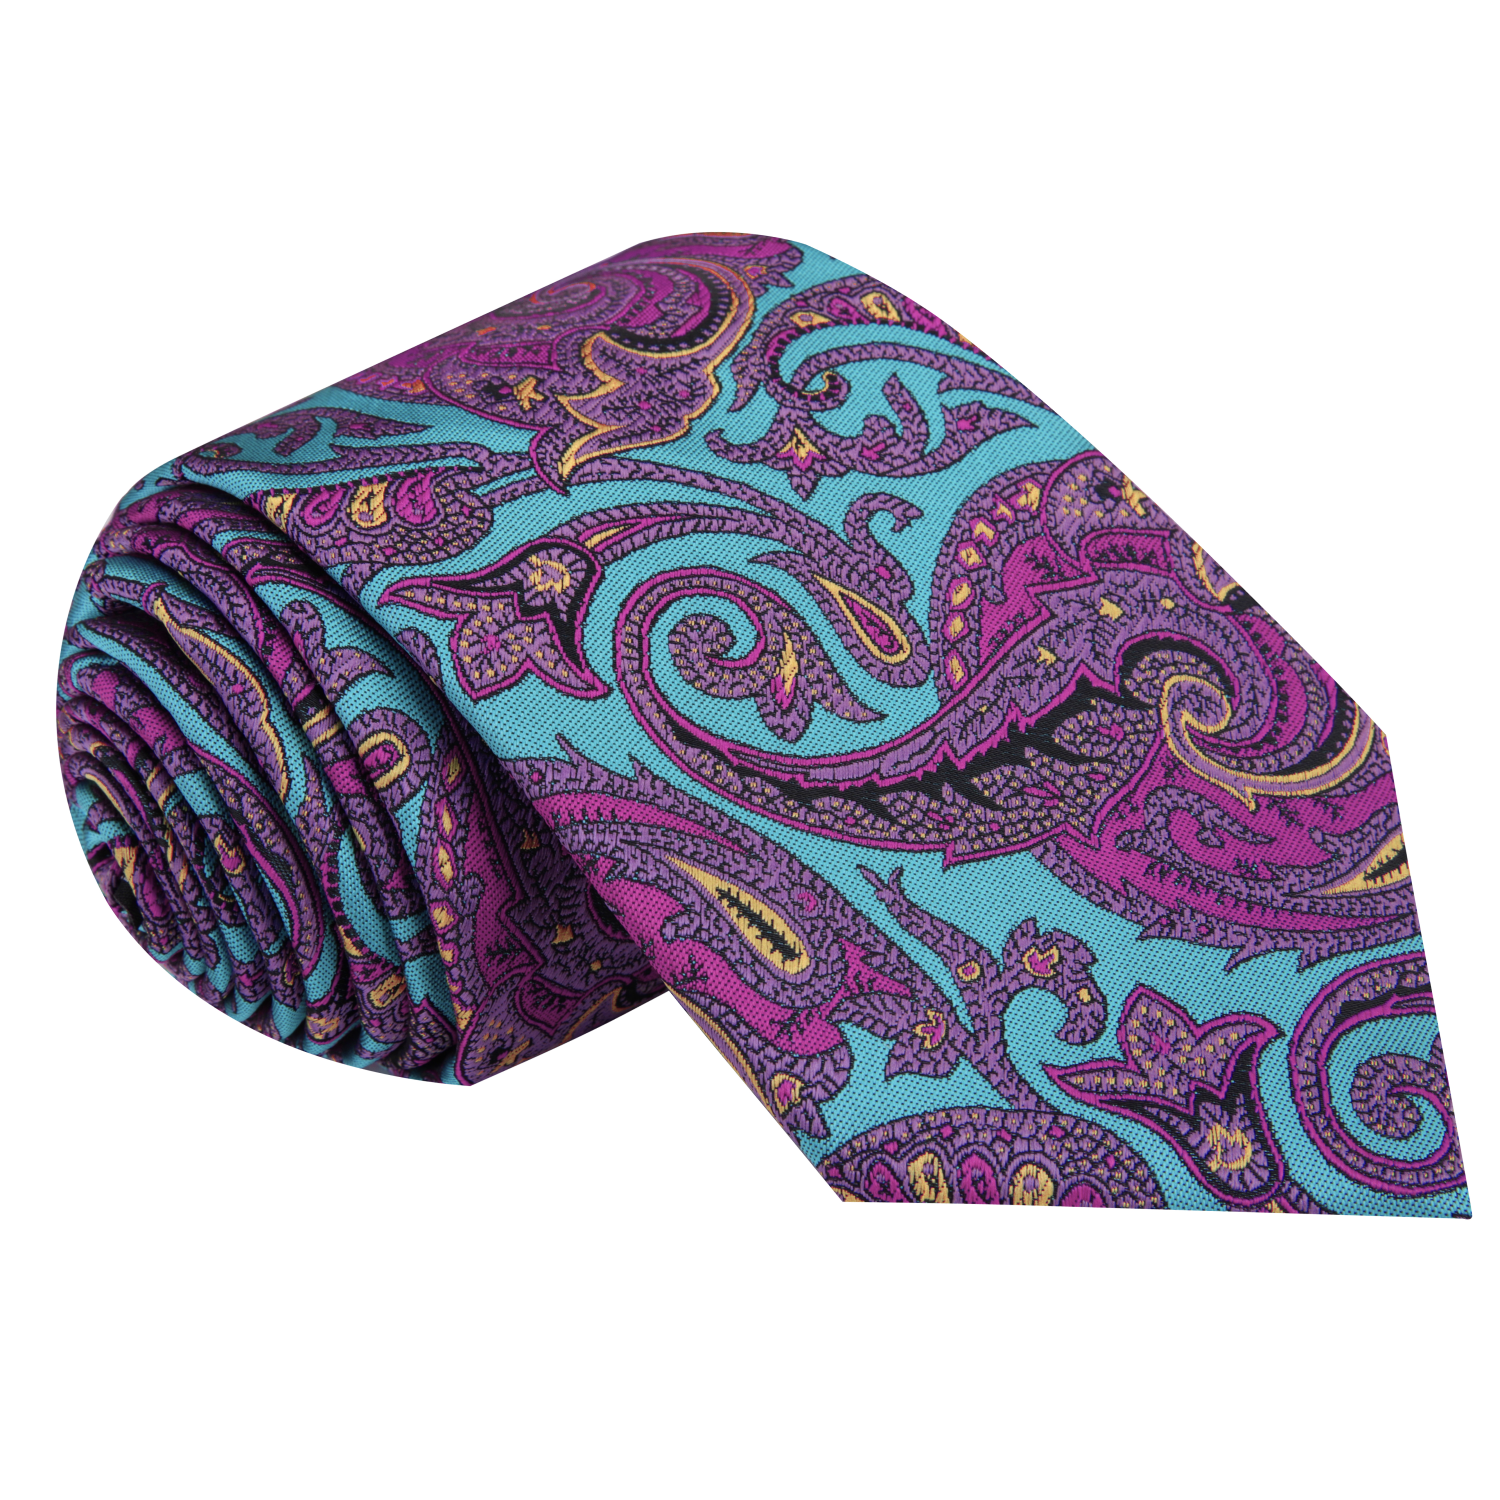 A Teal, Purple Intricate Paisley Pattern Necktie